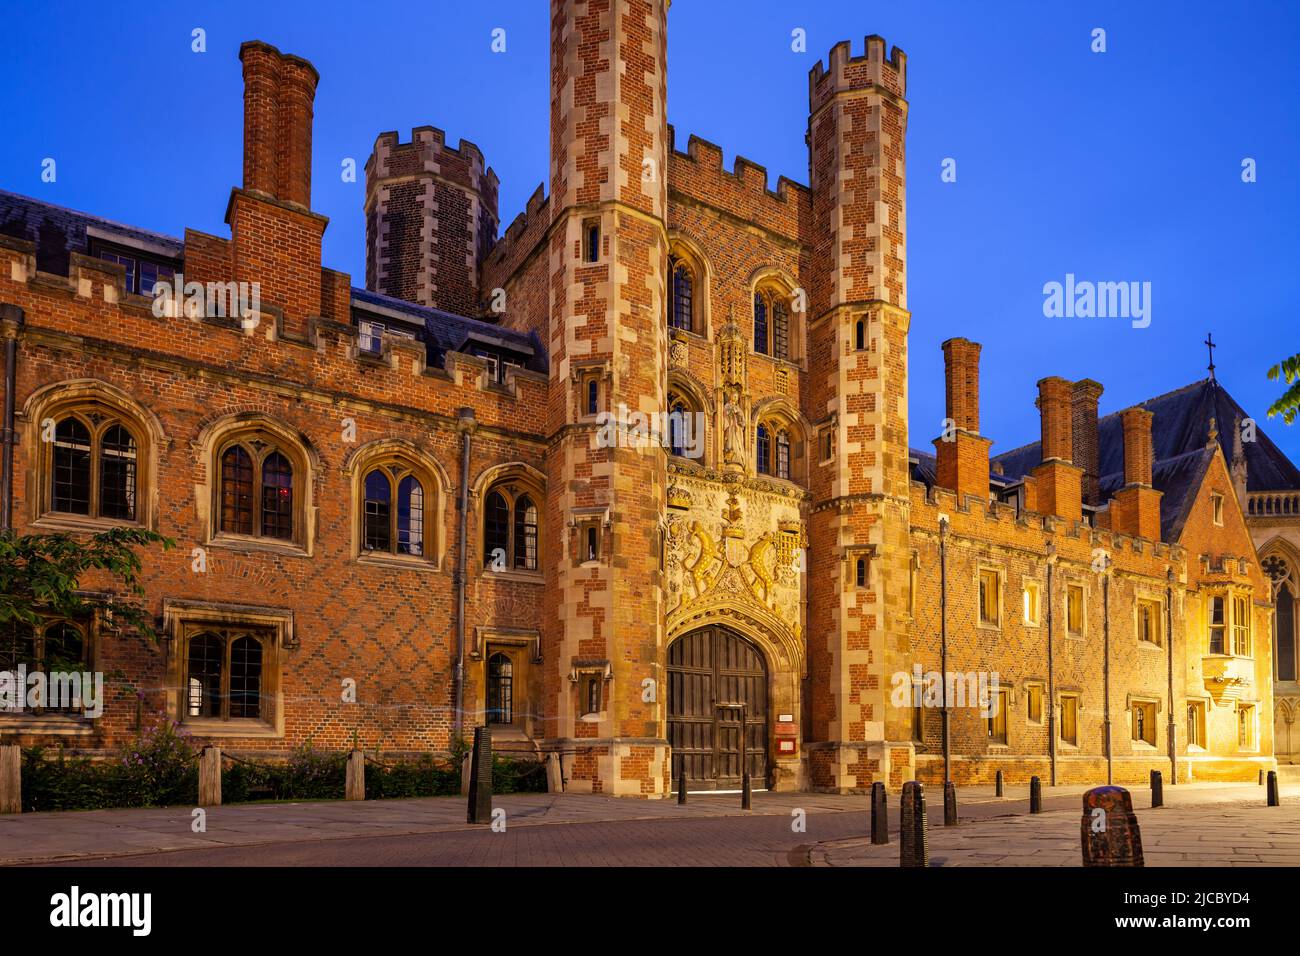 Dawn at St John's College in Cambridge, England. Stock Photo